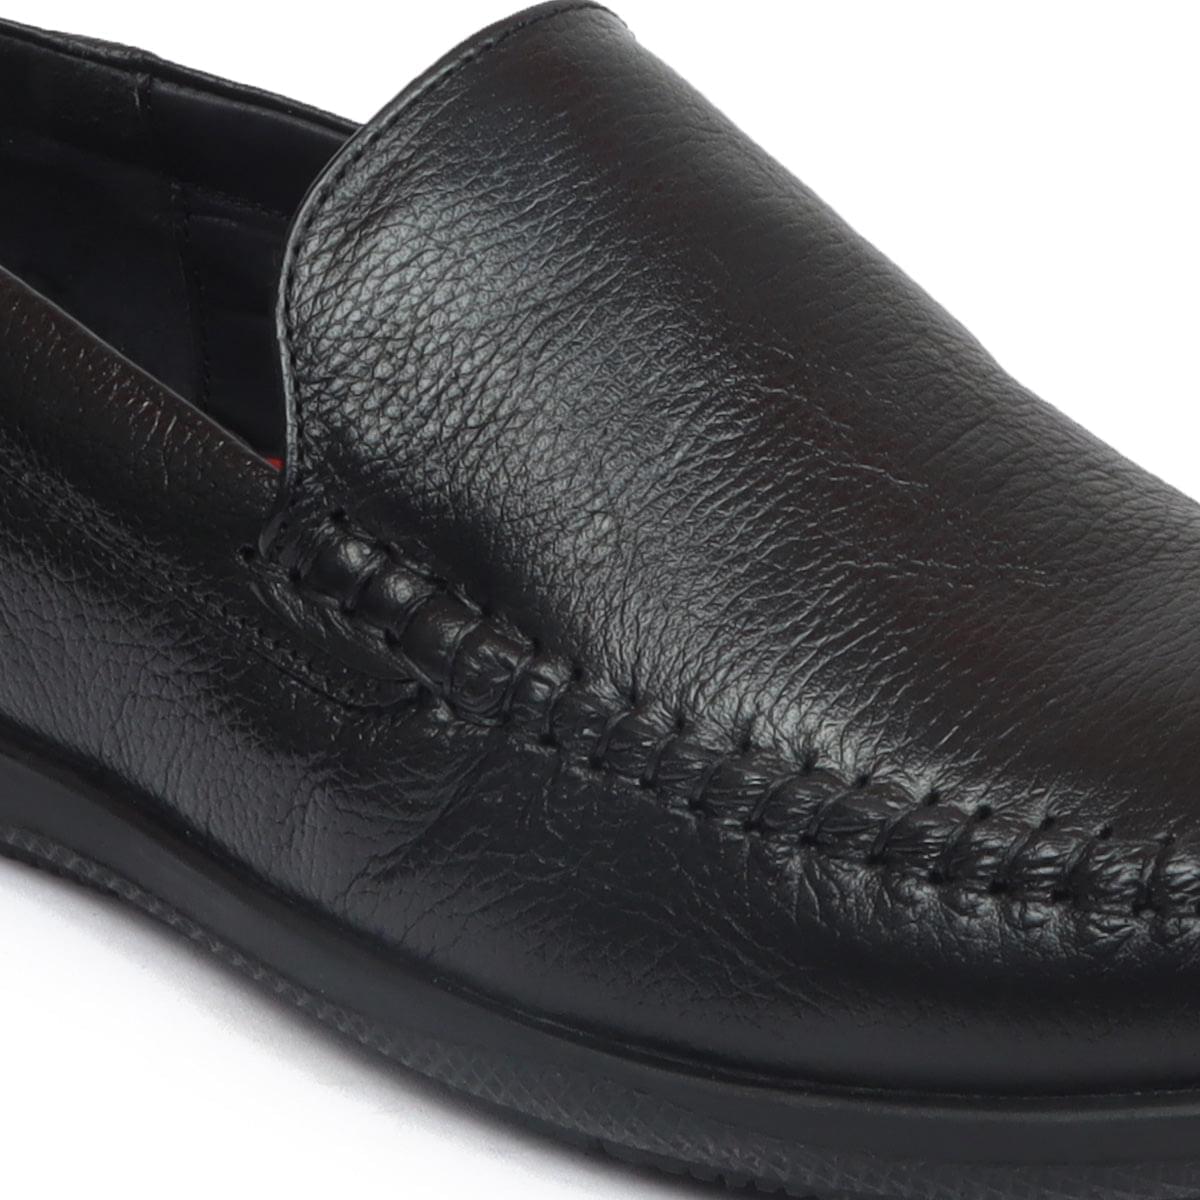 Formal Shoes for Men A-1138_4